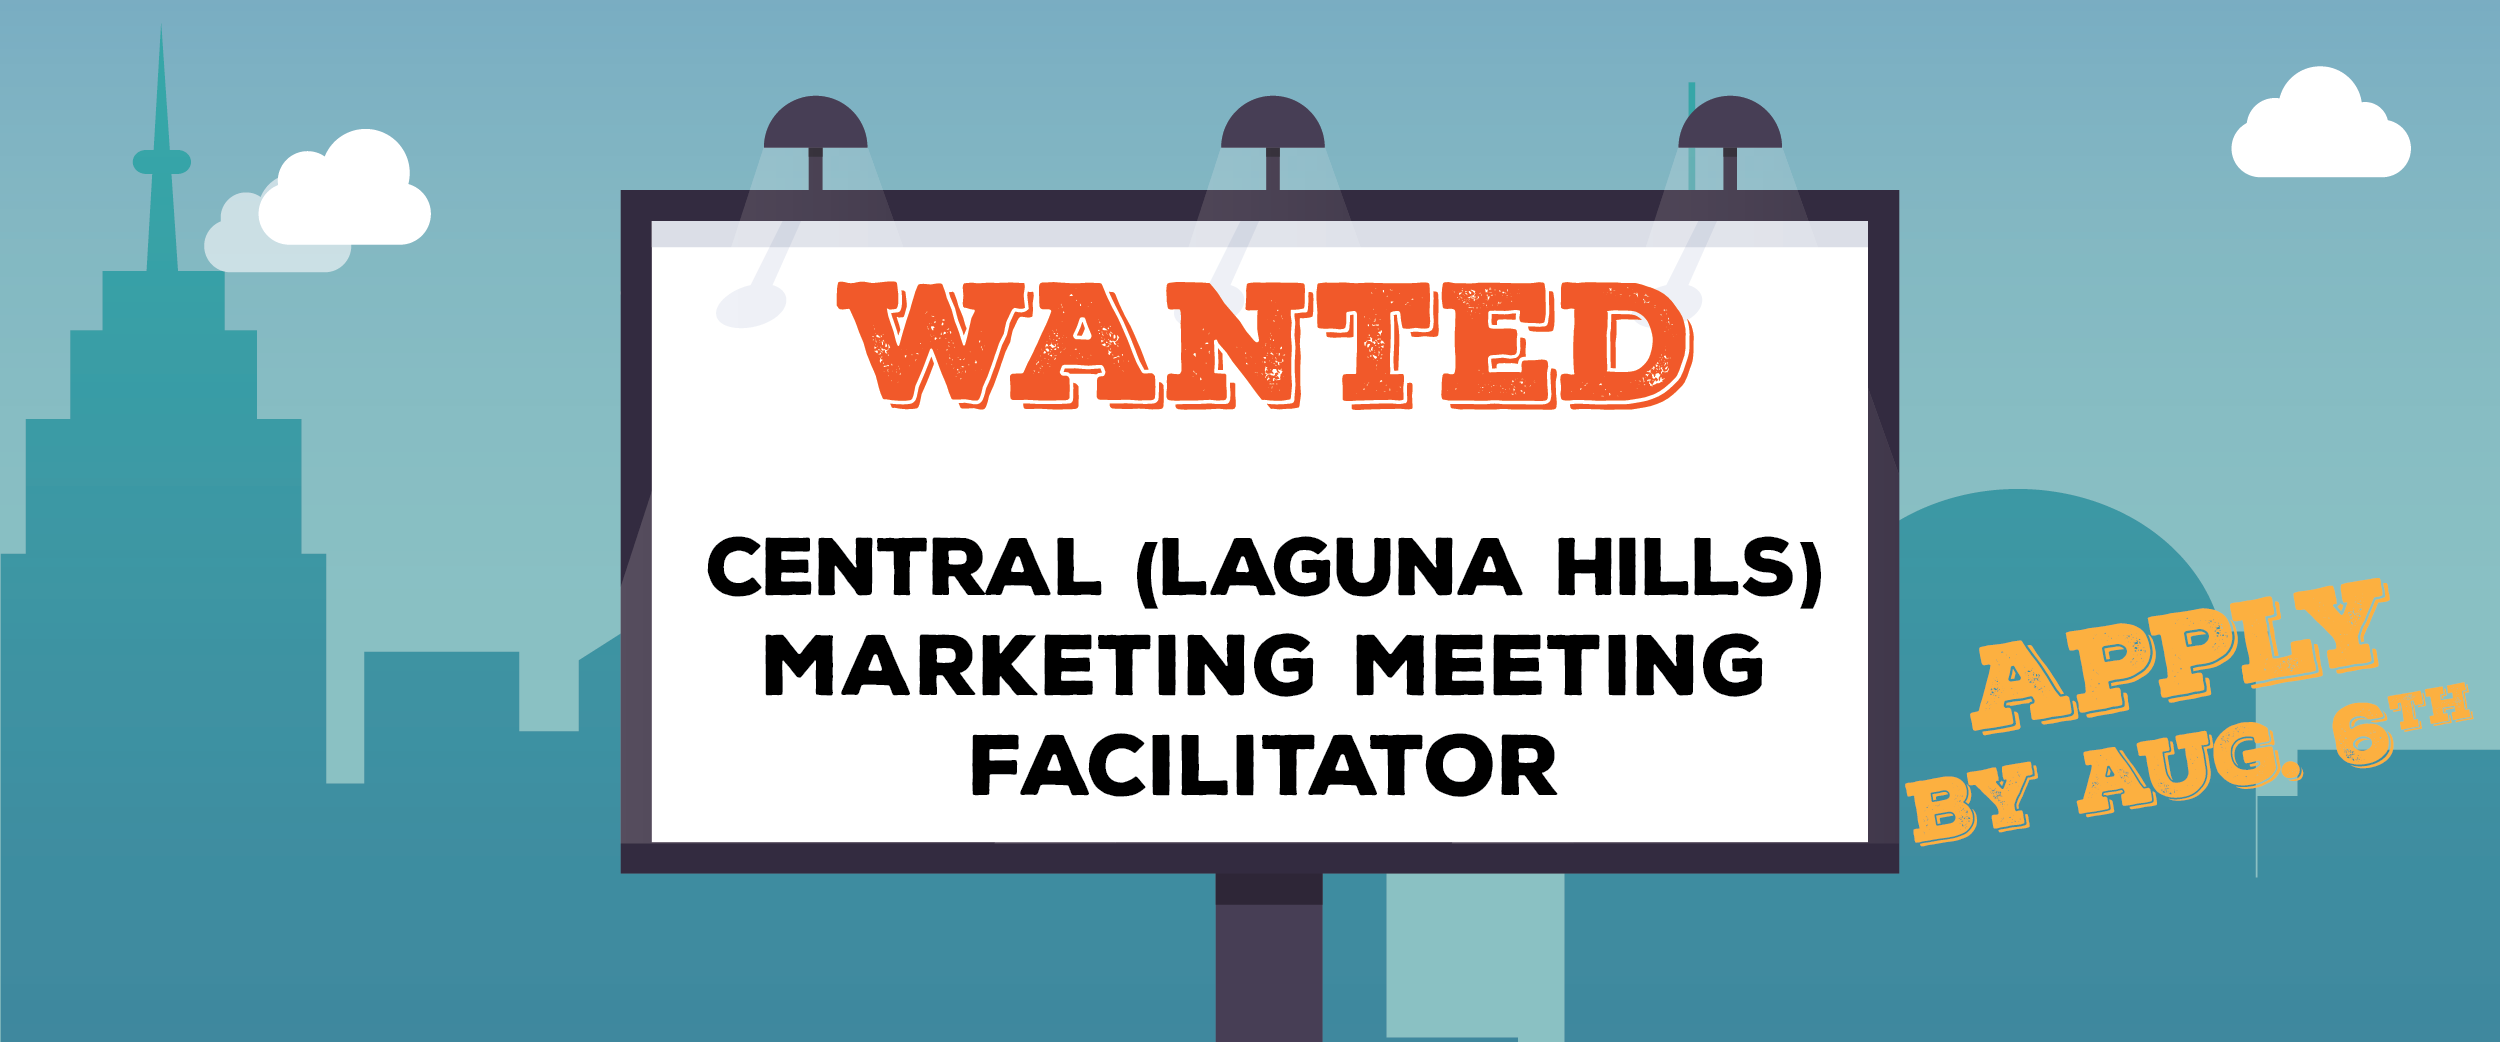 Wanted Marketing Meeting Facilitator Central Meeting